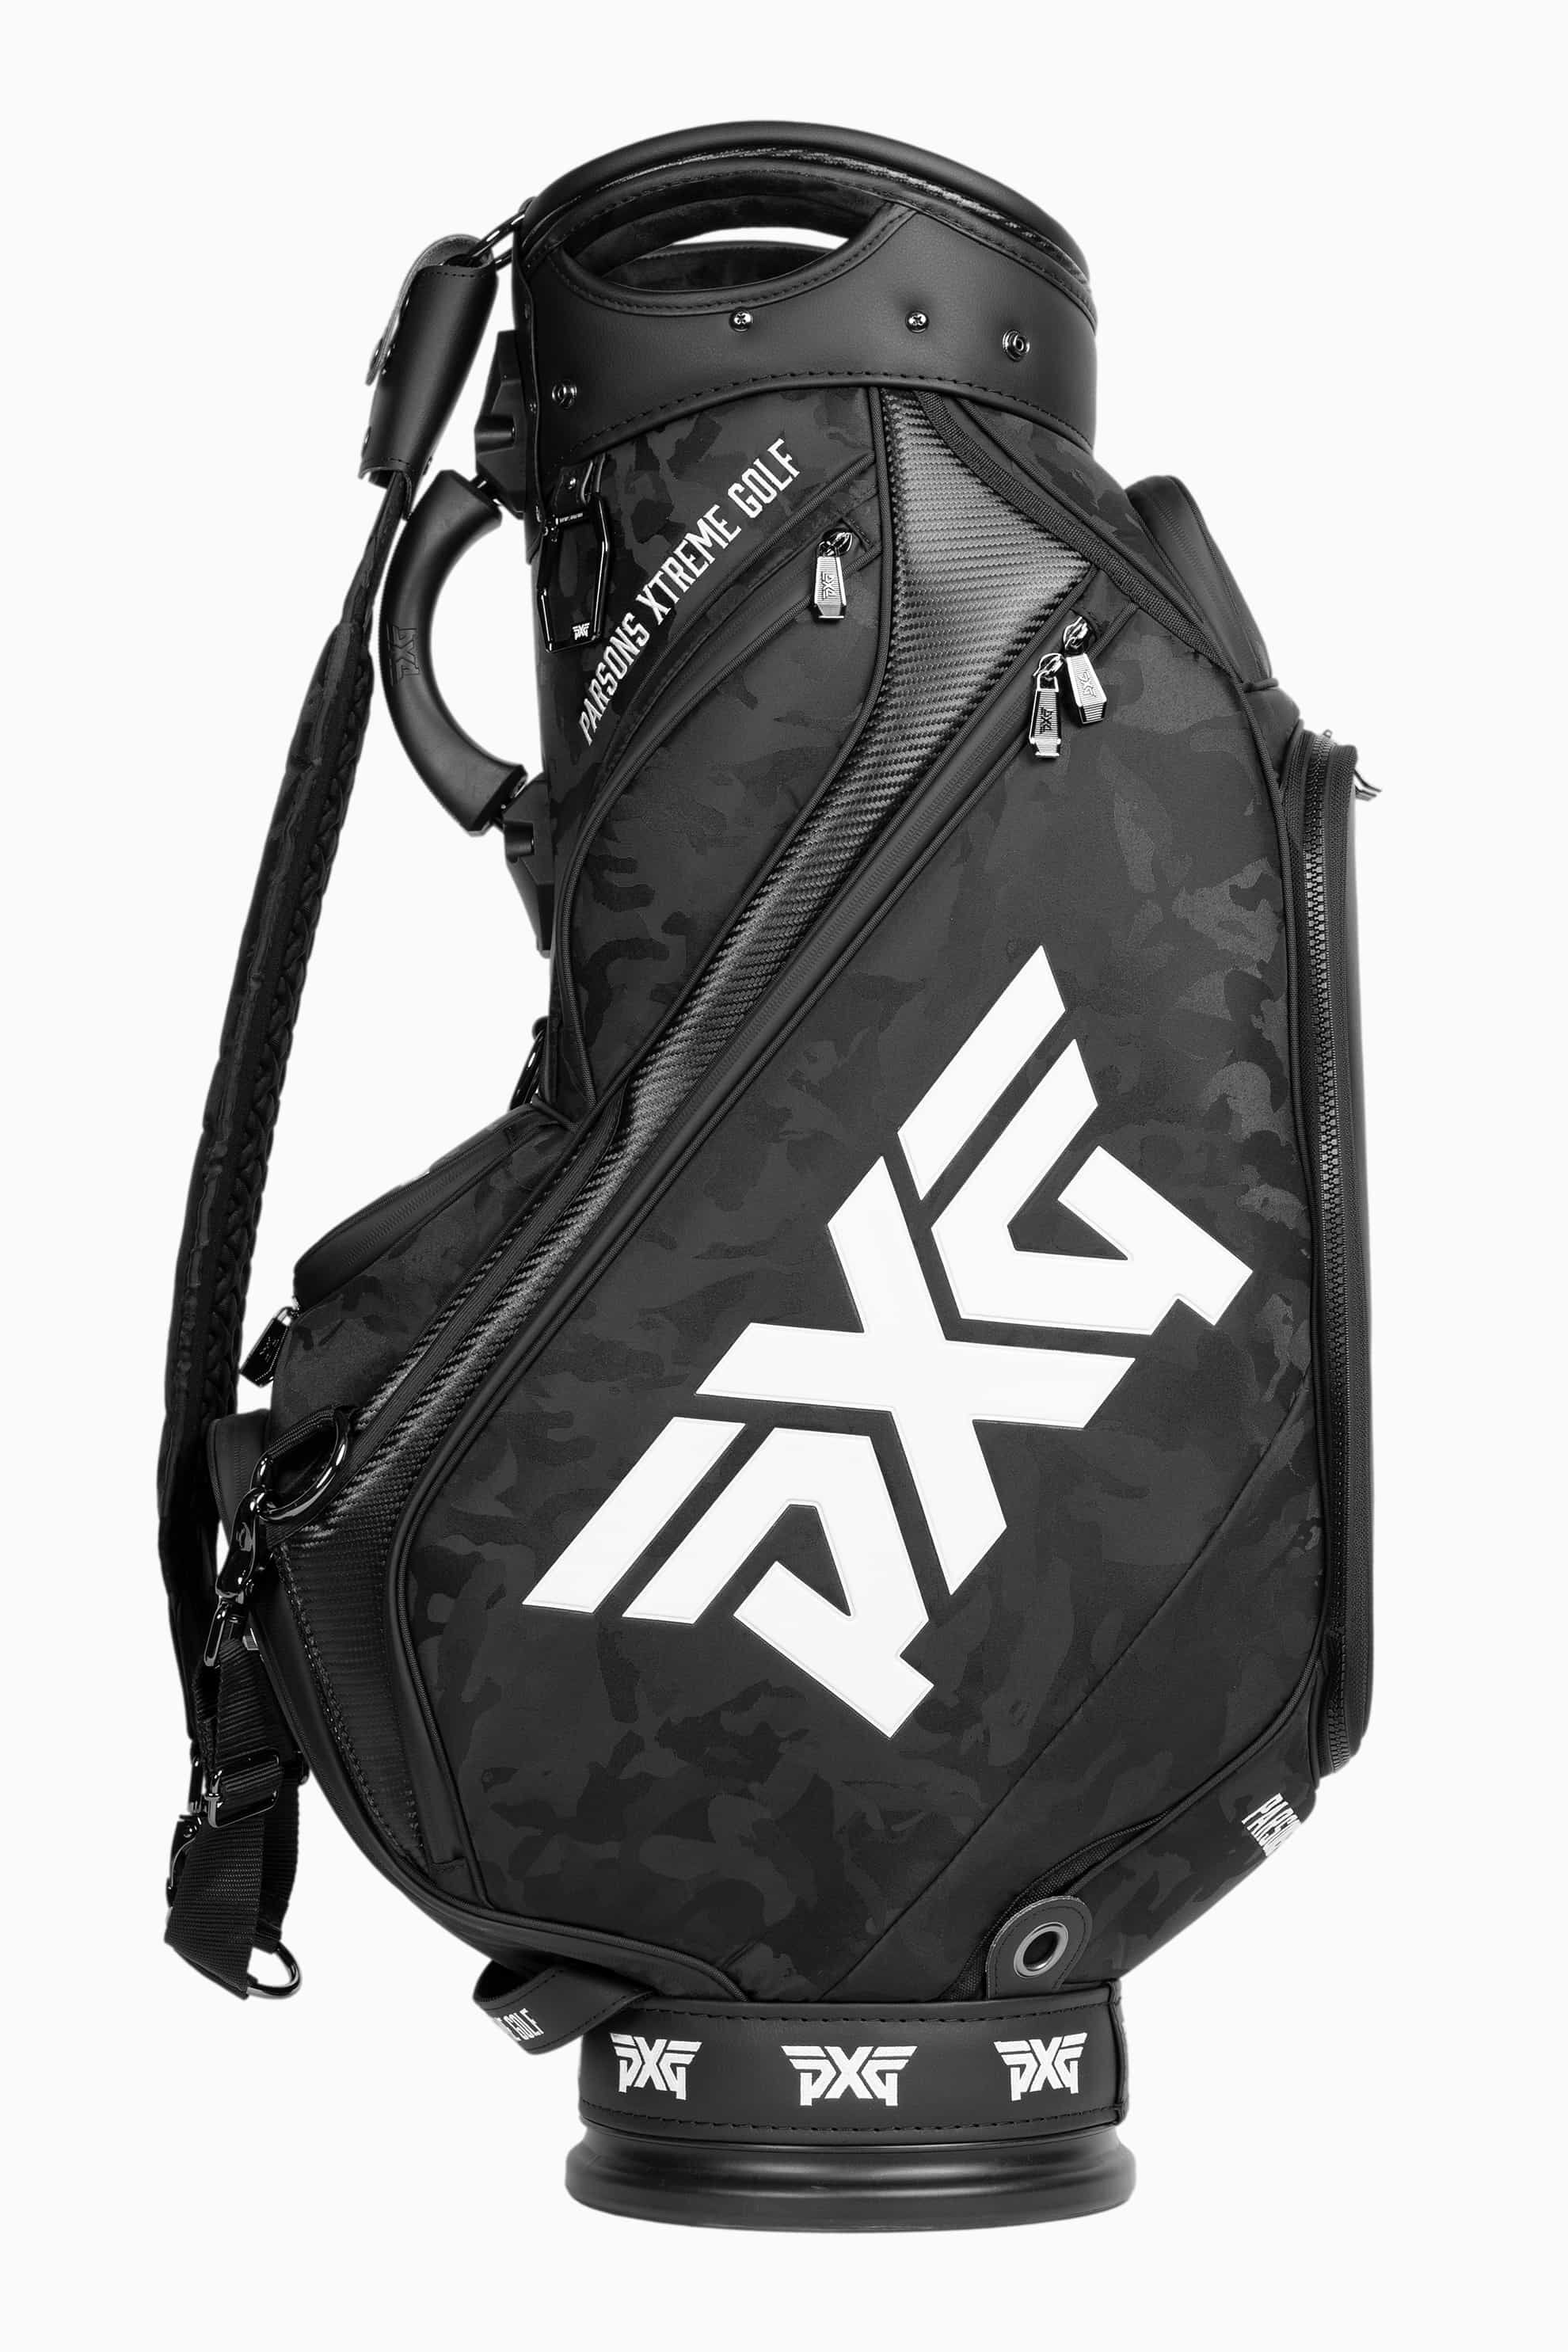 Jacquard Woven Fairway Camo™ Tour Bag | Golf Bags | Standing